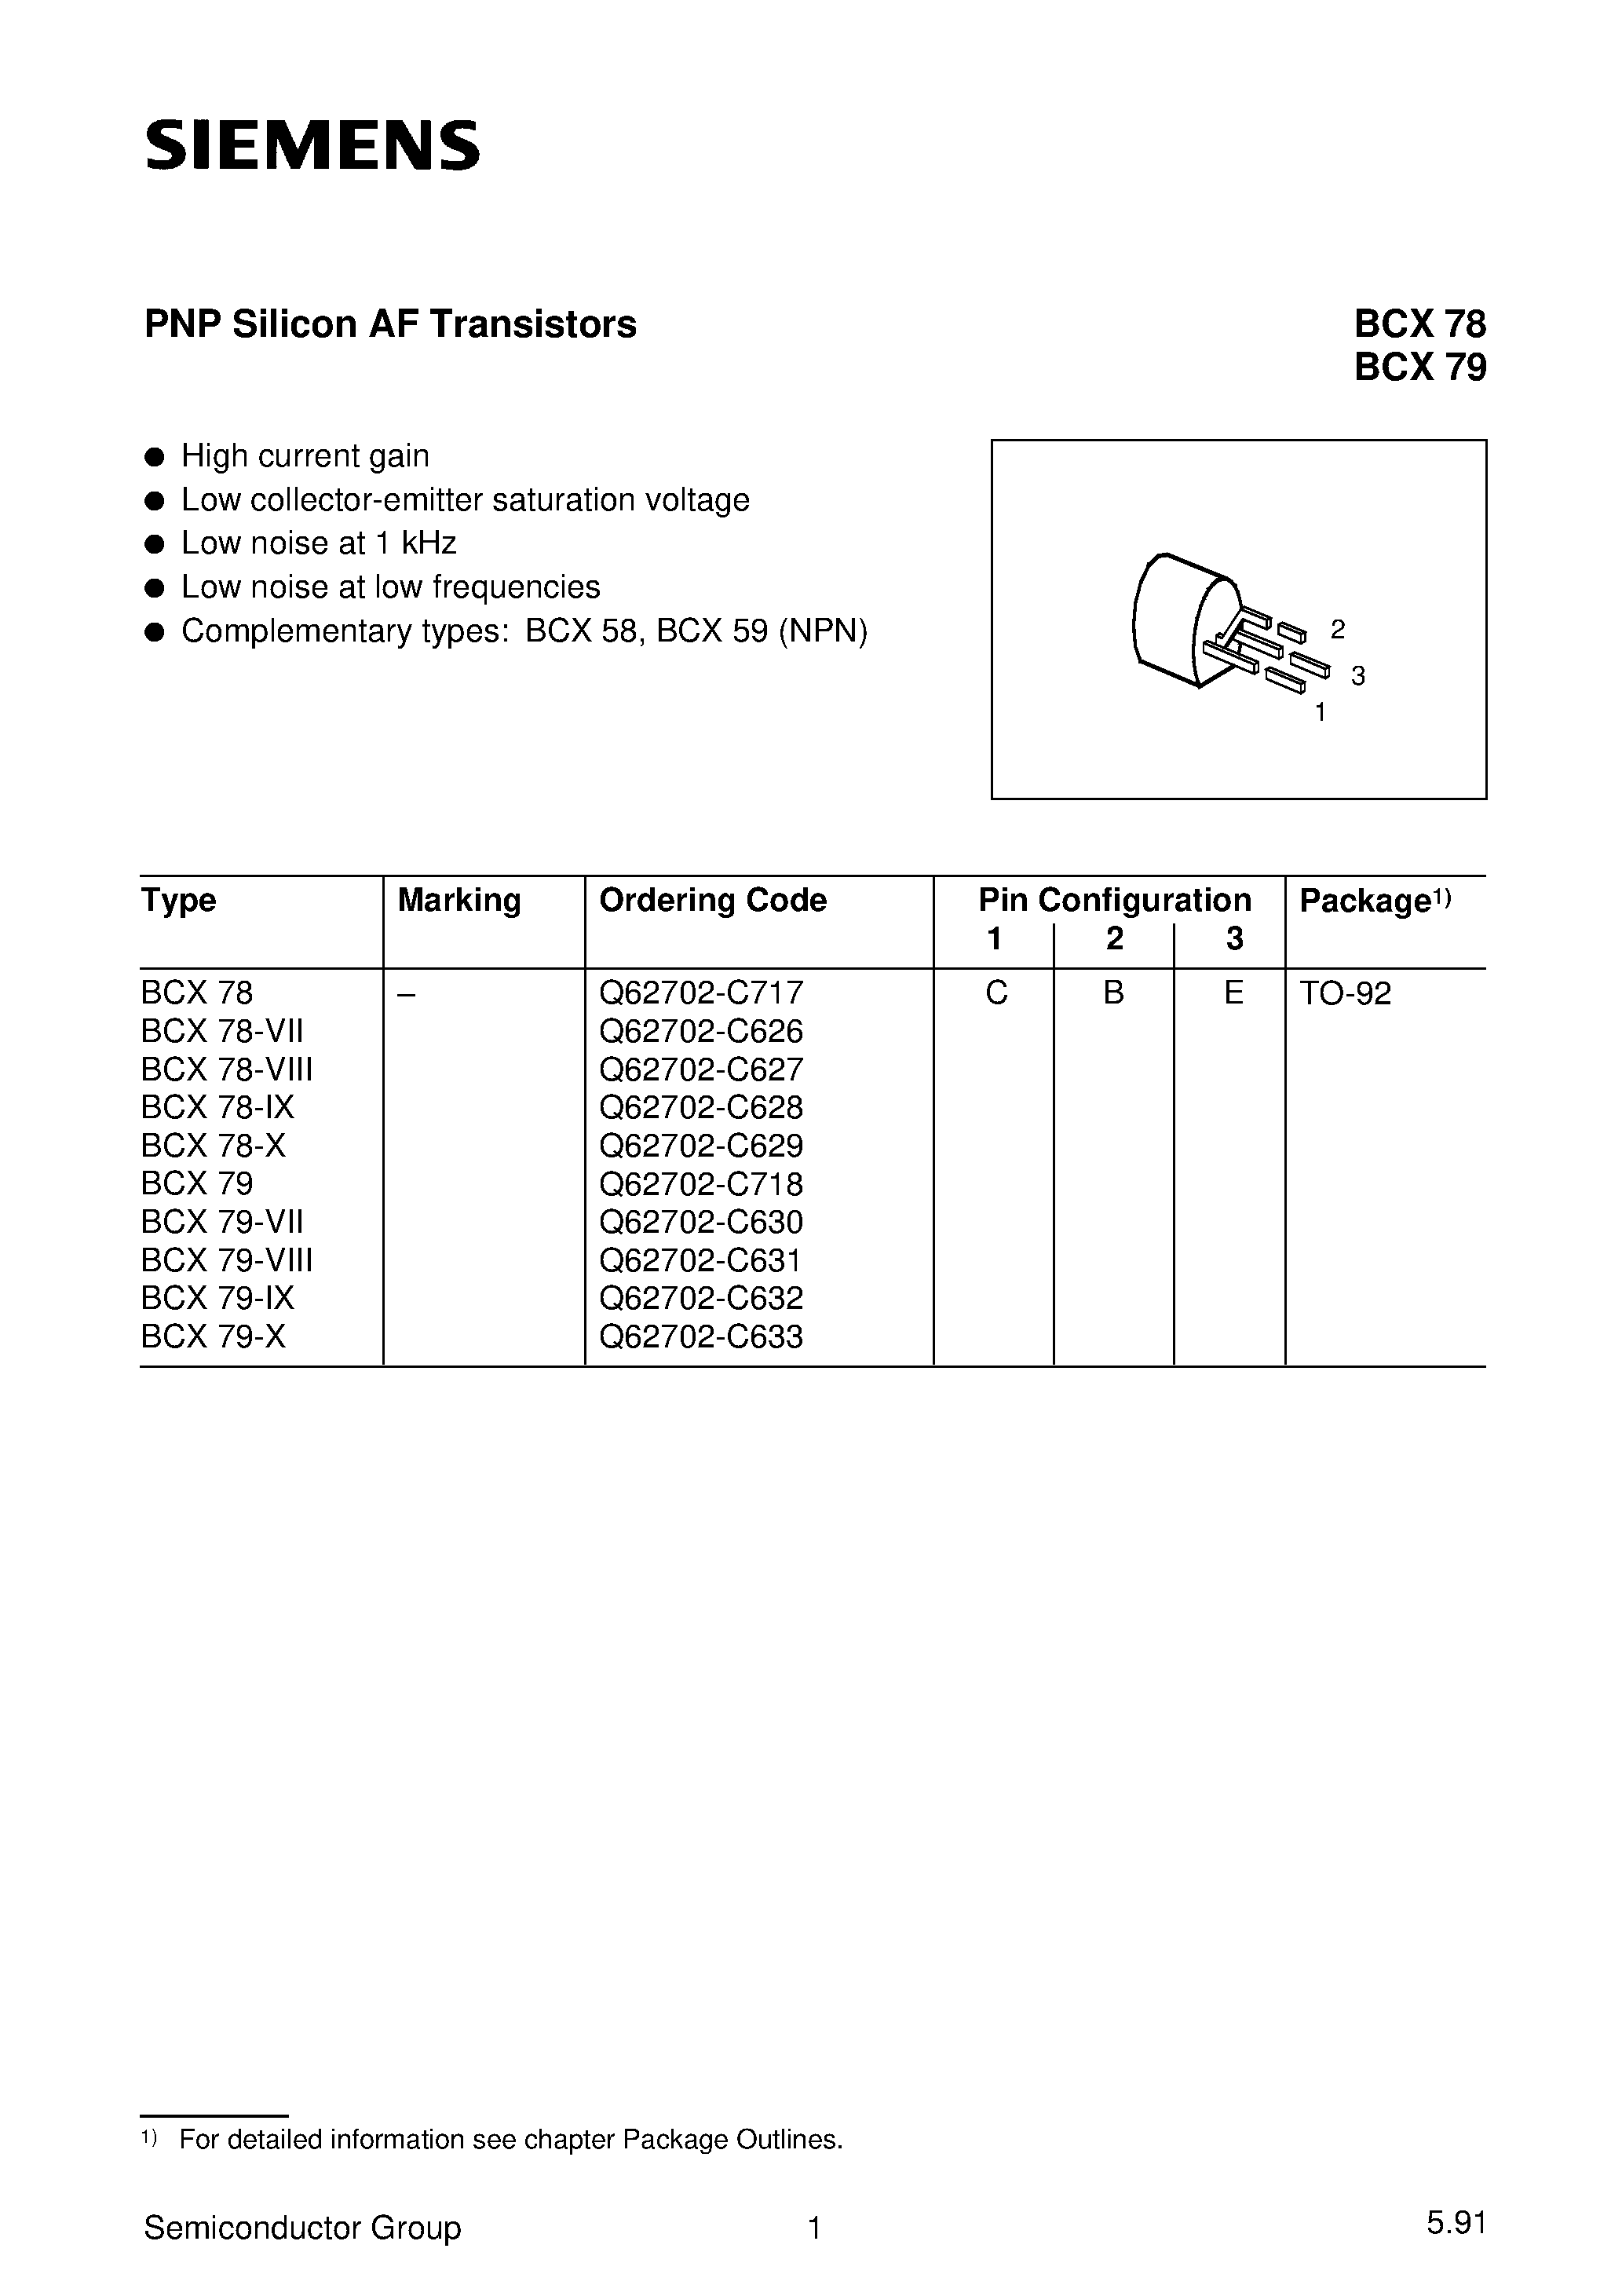 Datasheet BCX78-VIII - PNP Silicon AF Transistors (High current gain Low collector-emitter saturation voltage) page 1